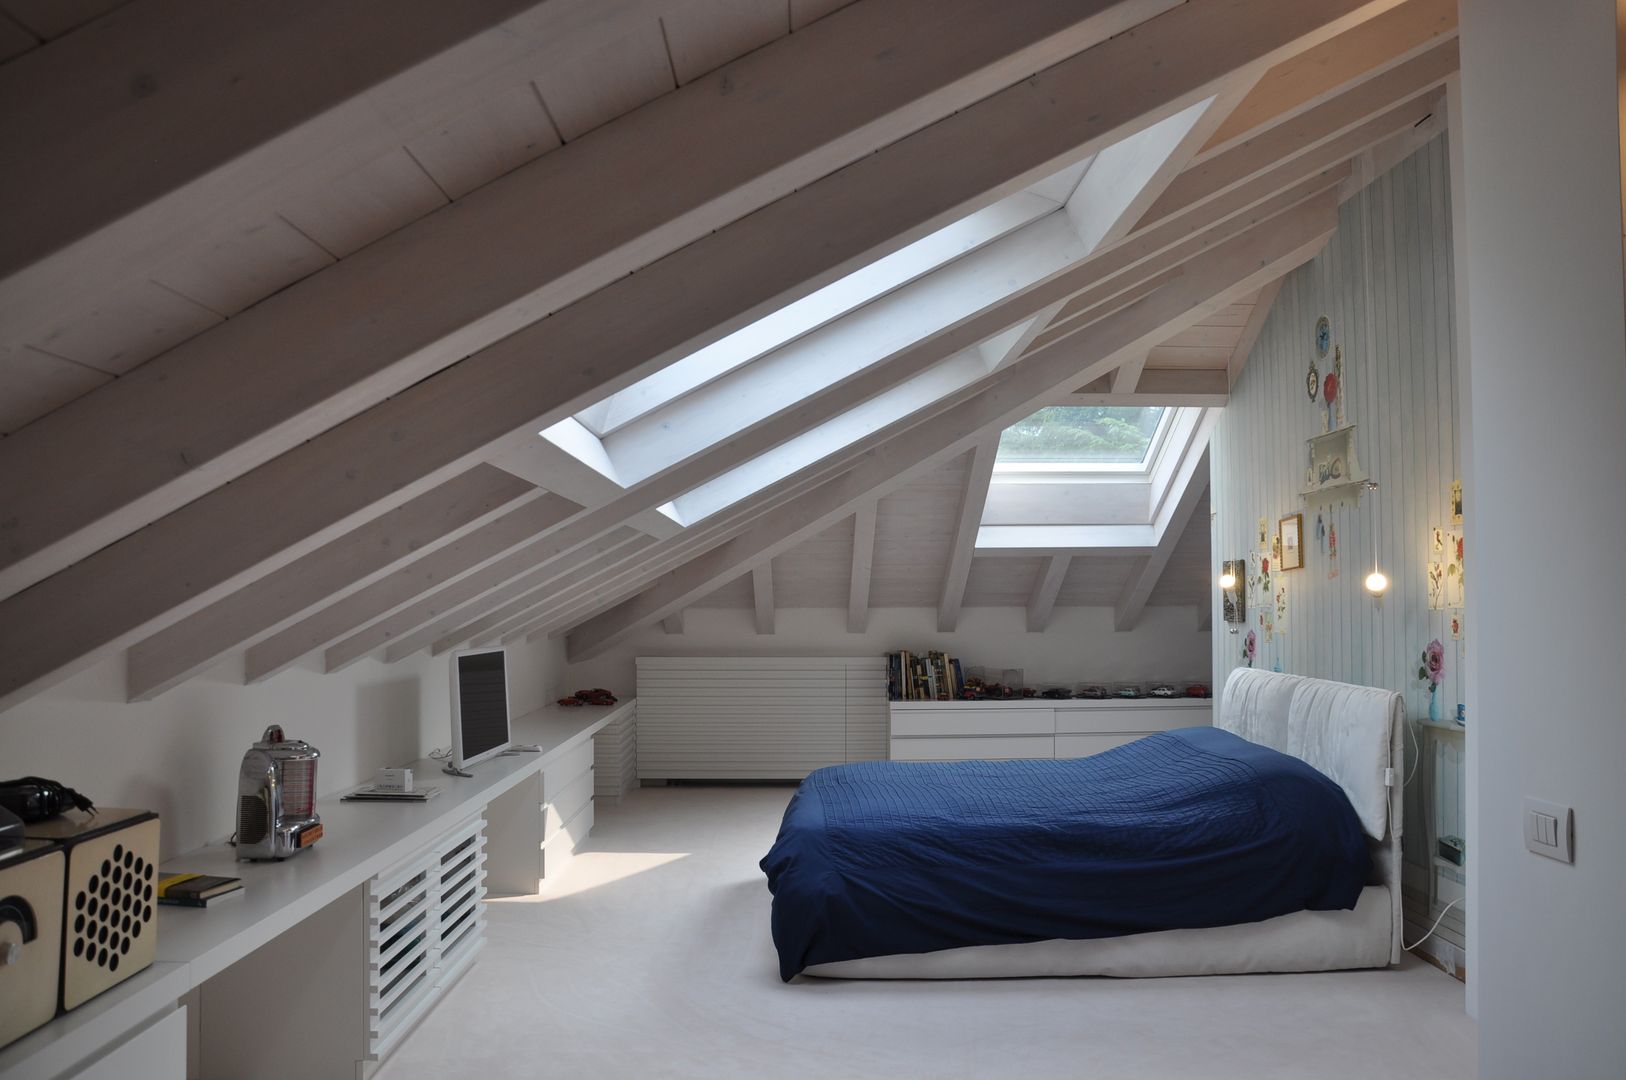 Renovation and interior design attic, F_Studio+ dell'Arch. Davide Friso F_Studio+ dell'Arch. Davide Friso Modern Bedroom